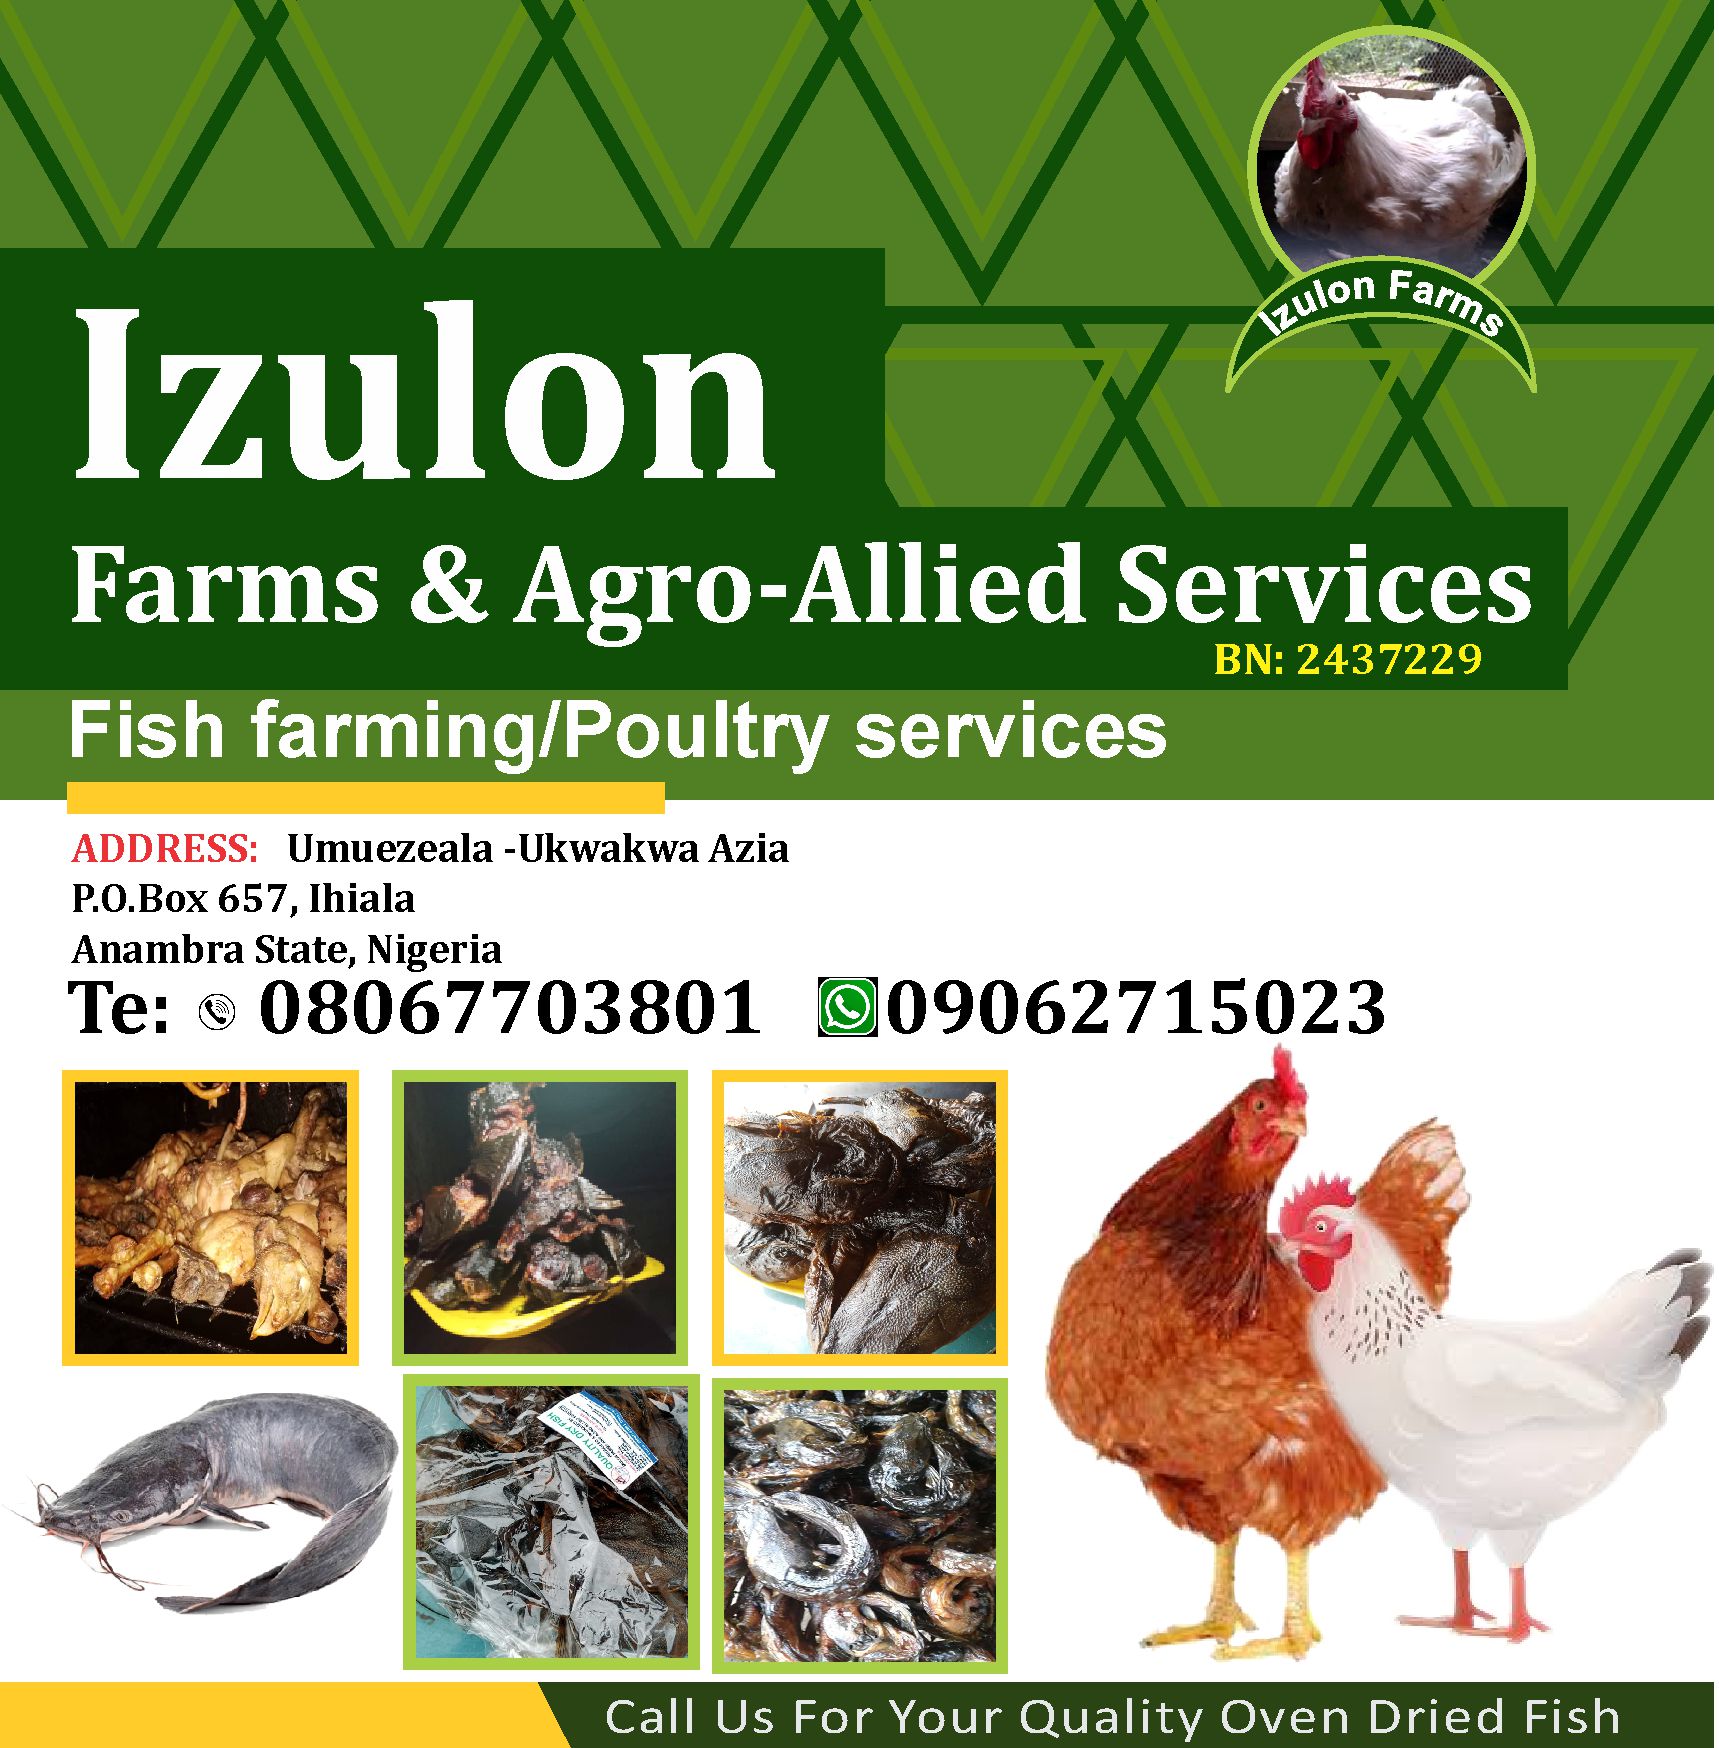 Izulon Farms & Agro Allied Services